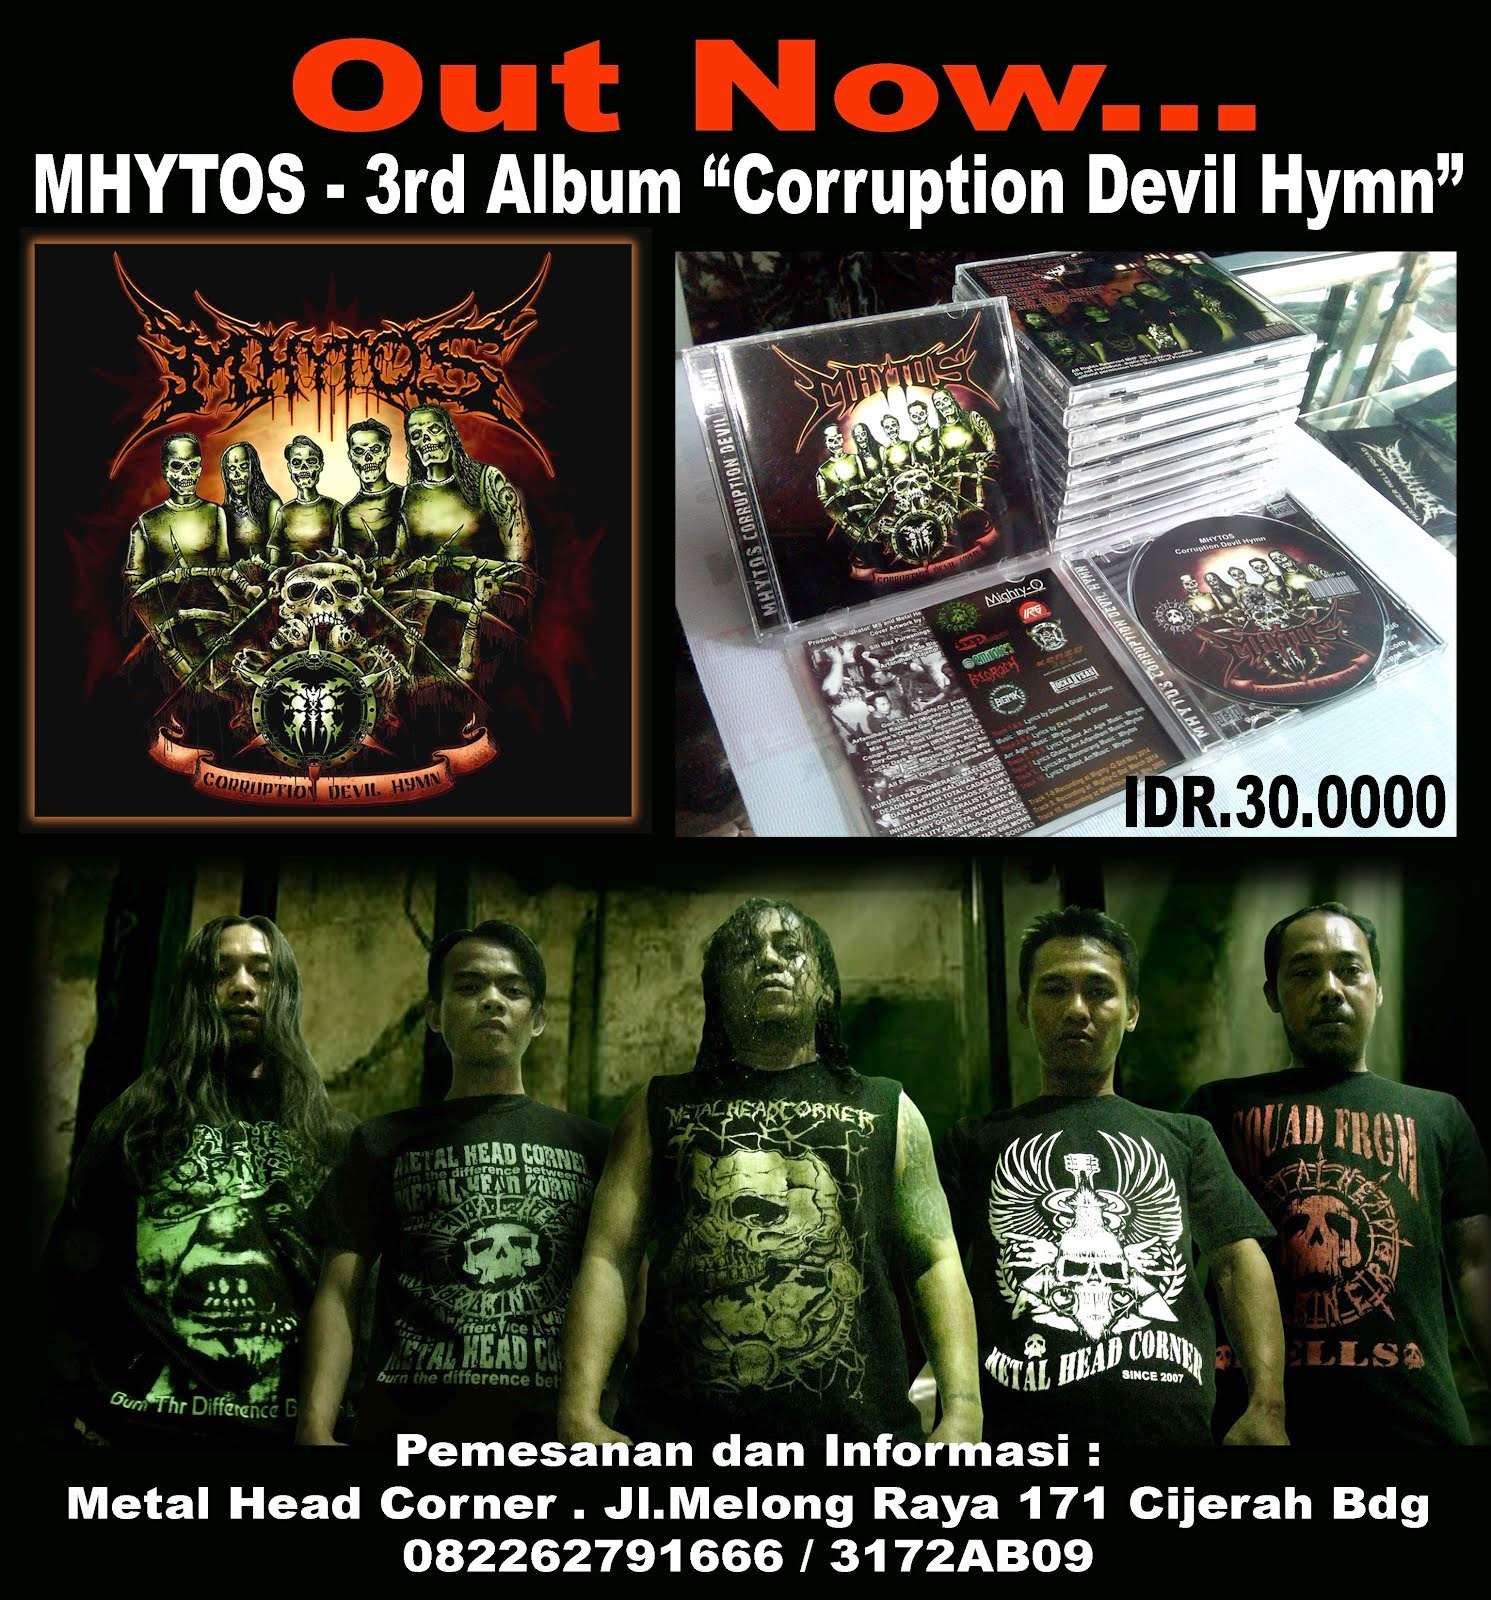 MHYTOS 3rd Album "Corruption Devil Hymn"